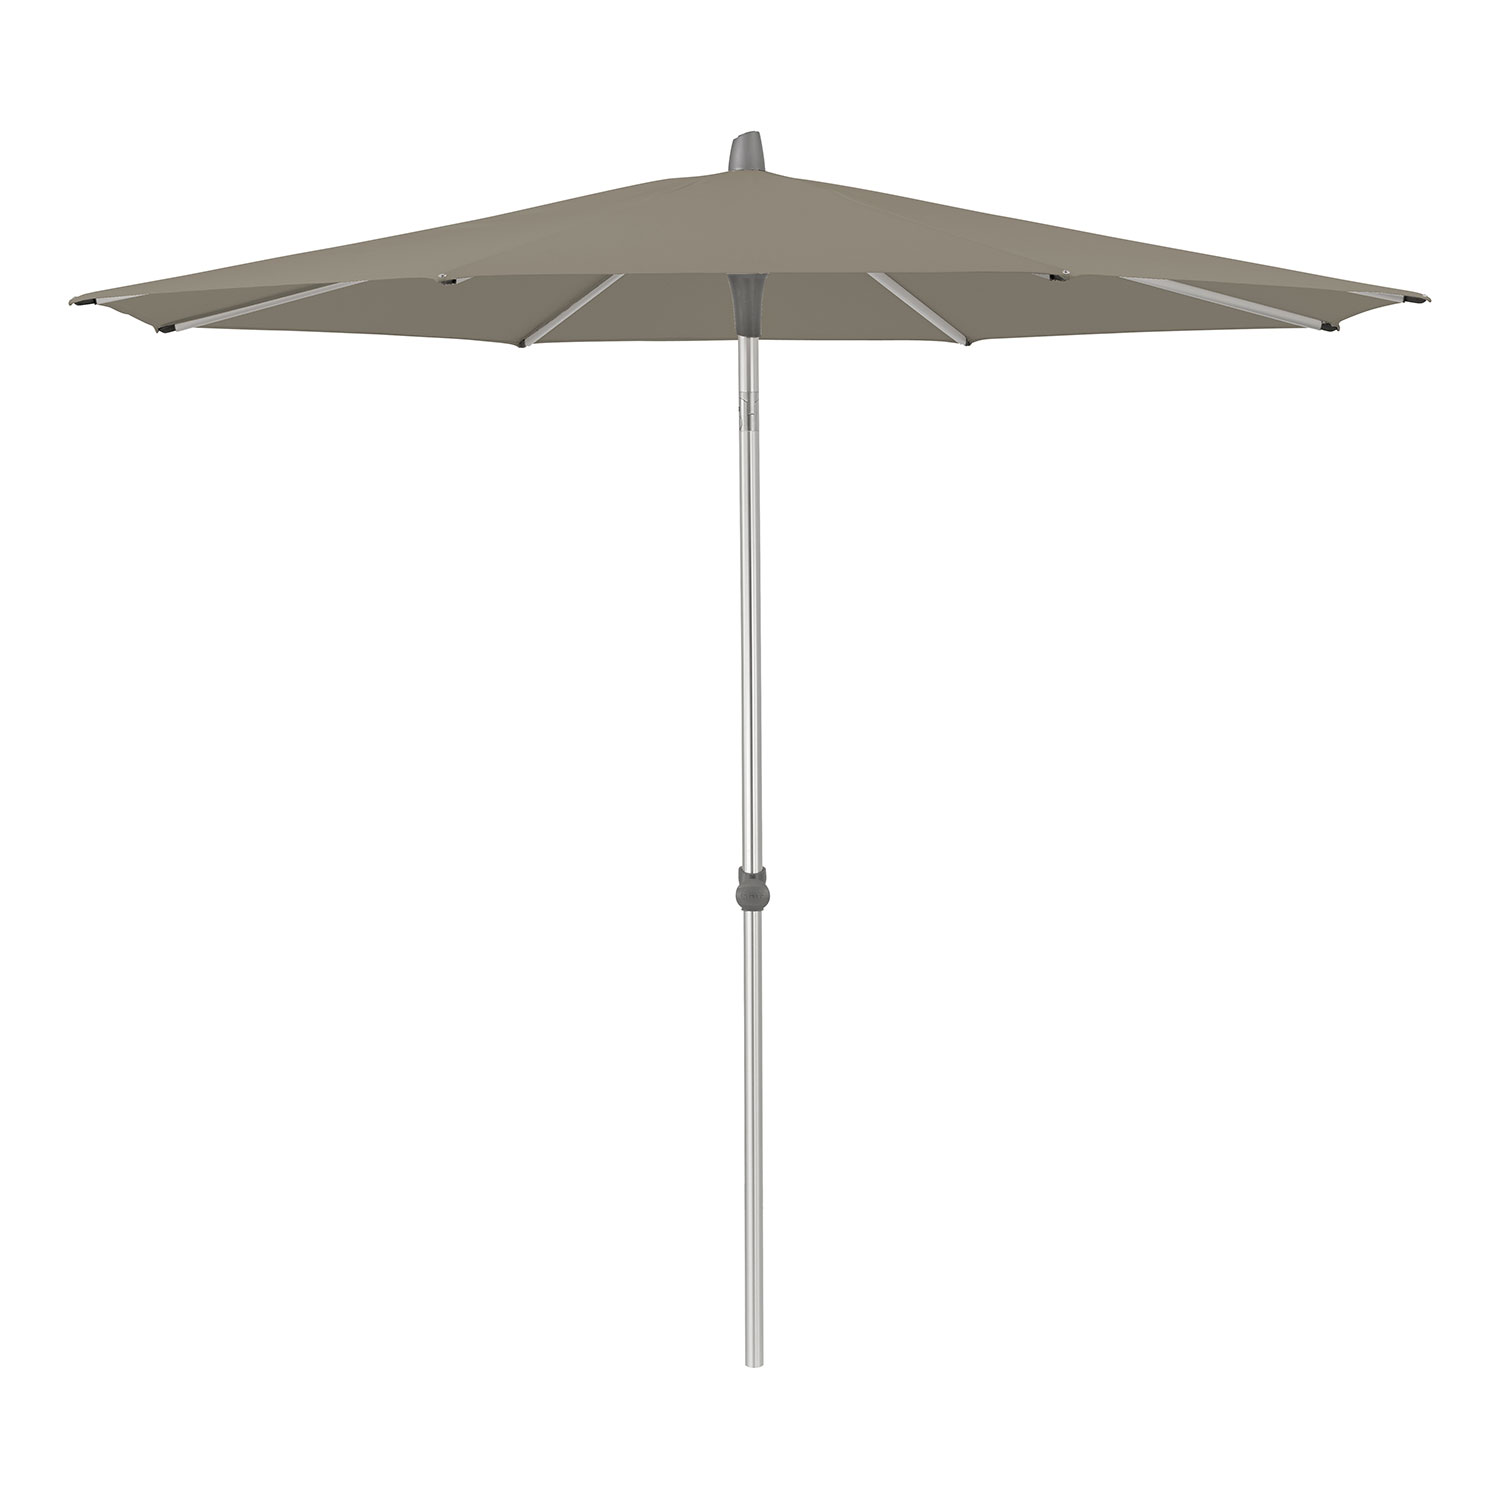 Glatz Alu-smart parasoll 200 cm Kat.4 461 Taupe